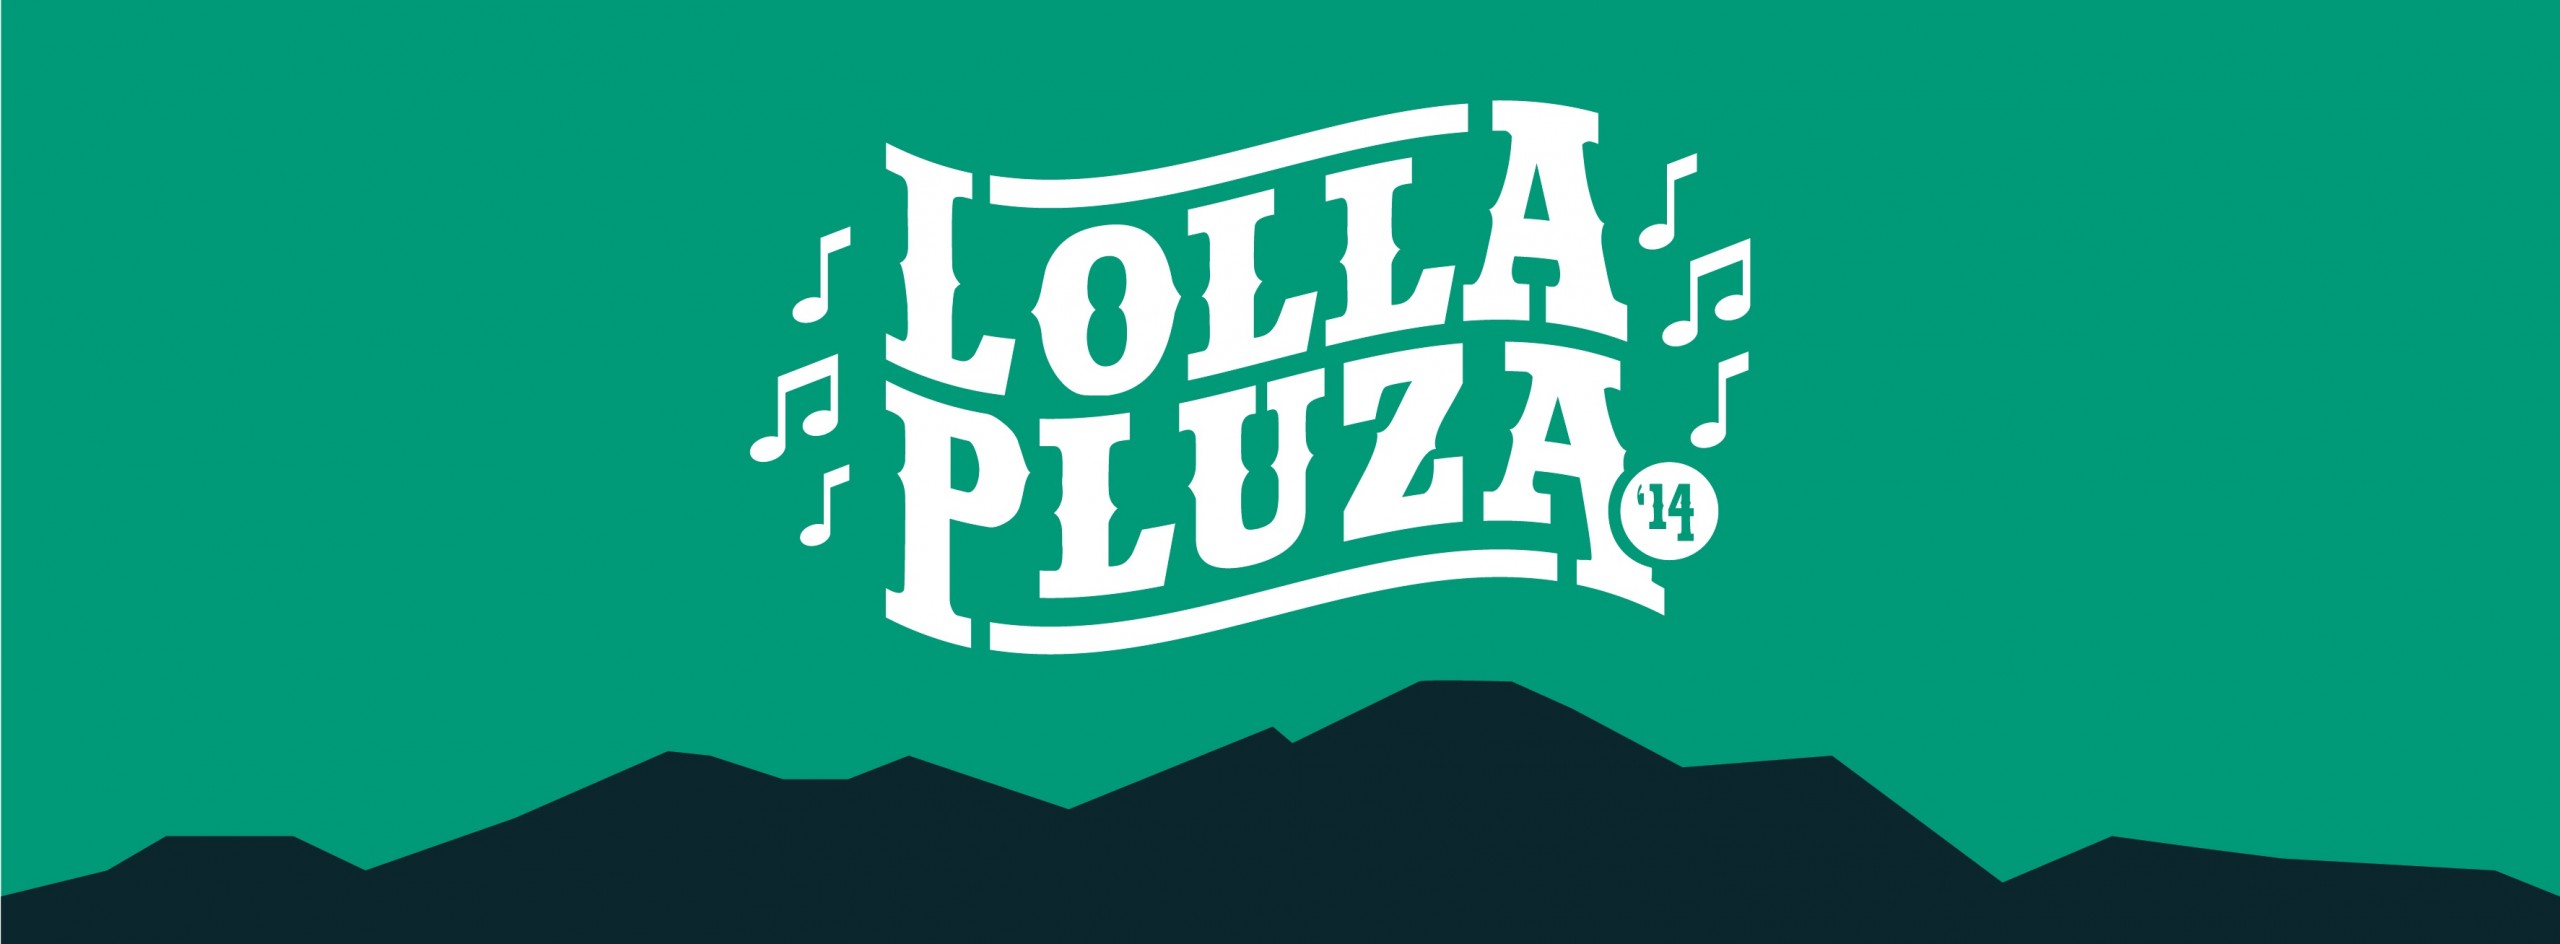 lollaPLUza 2014 banner